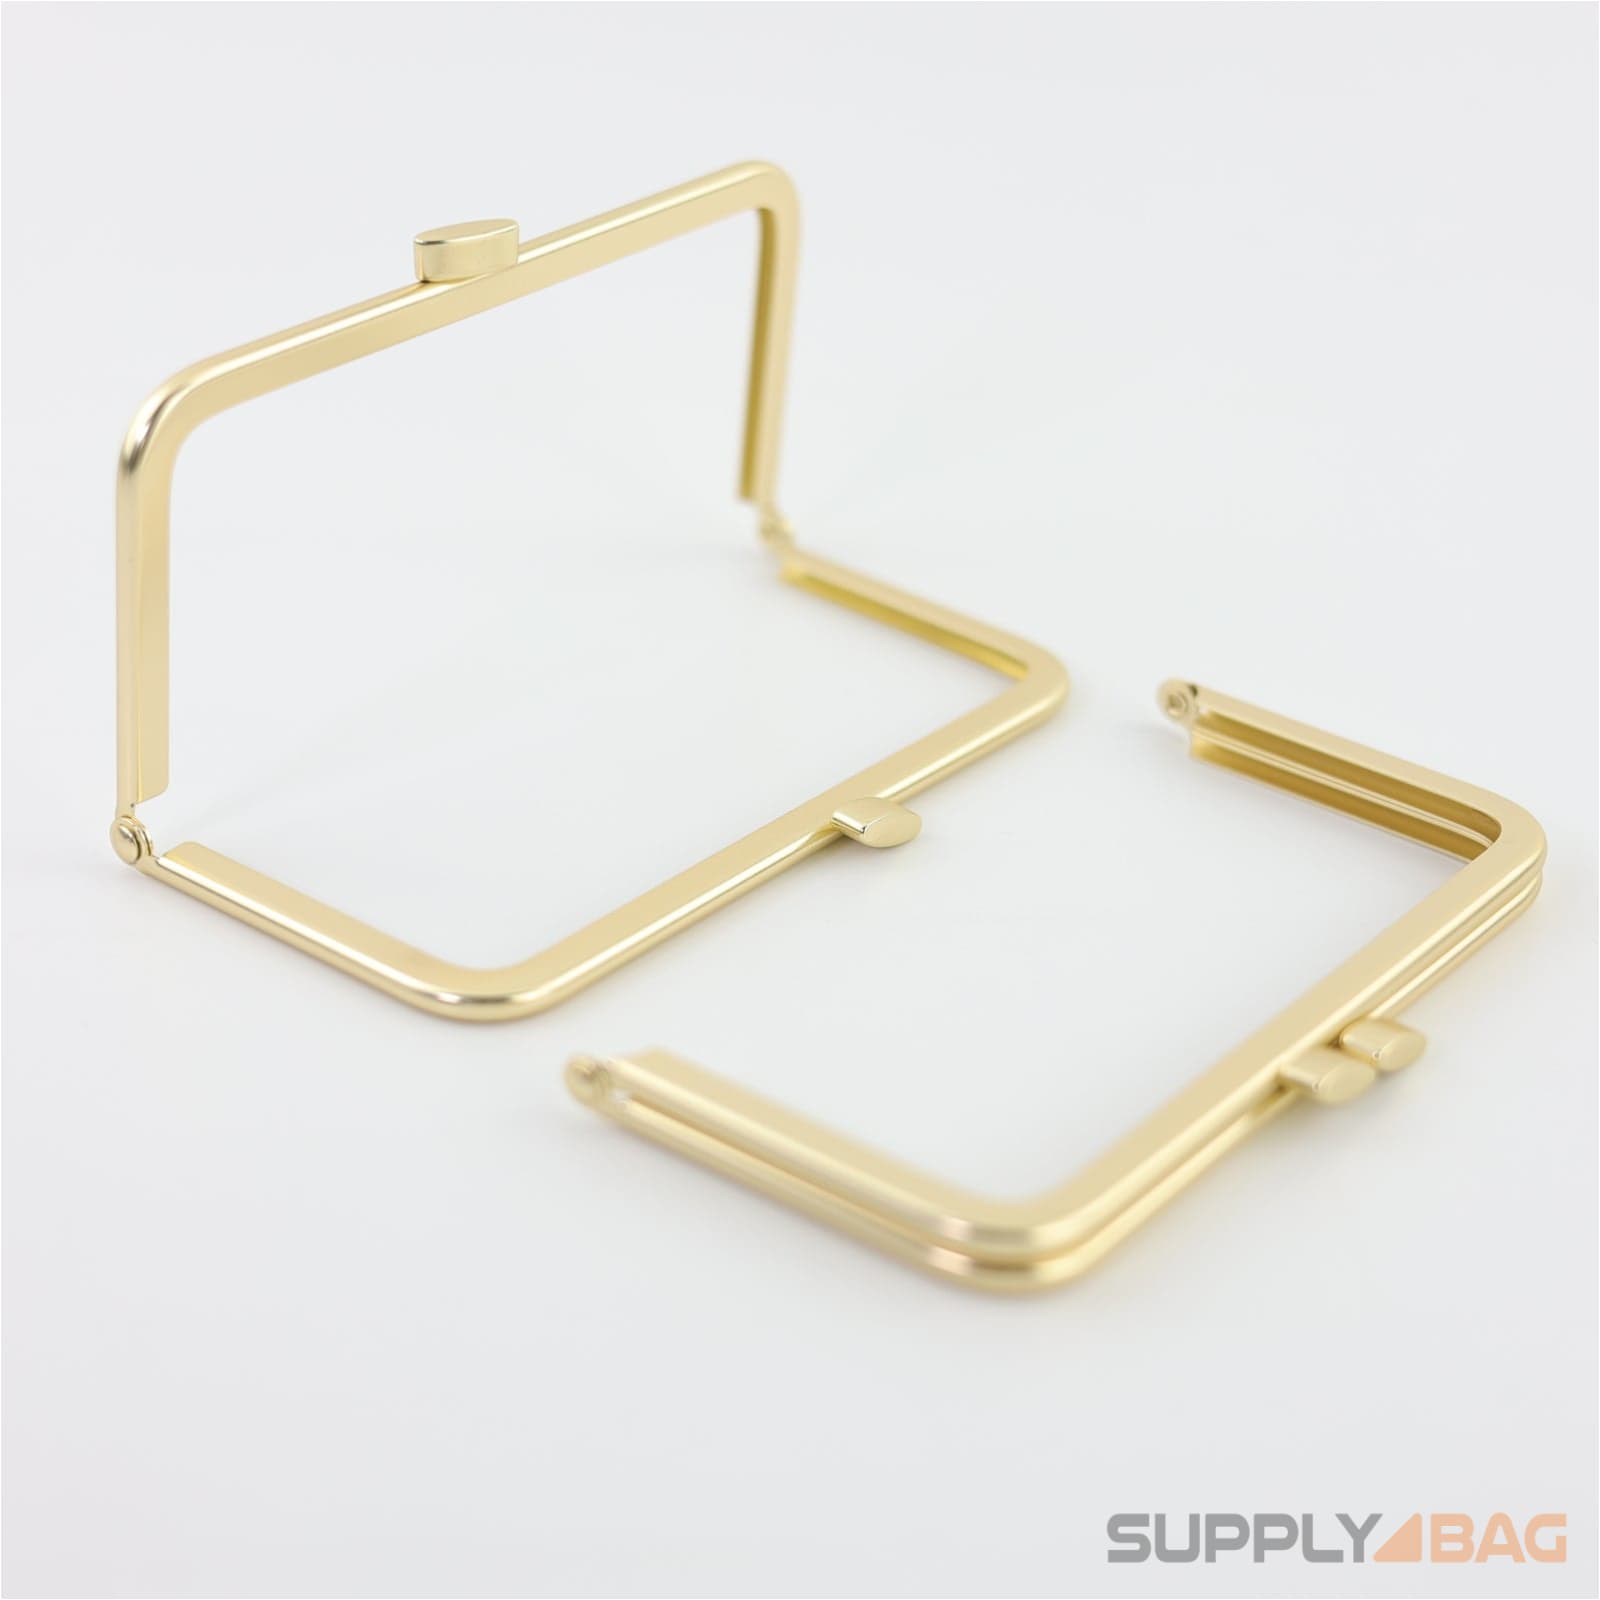 5 3/8 x 2 3/4 inch - matte gold metal purse frame